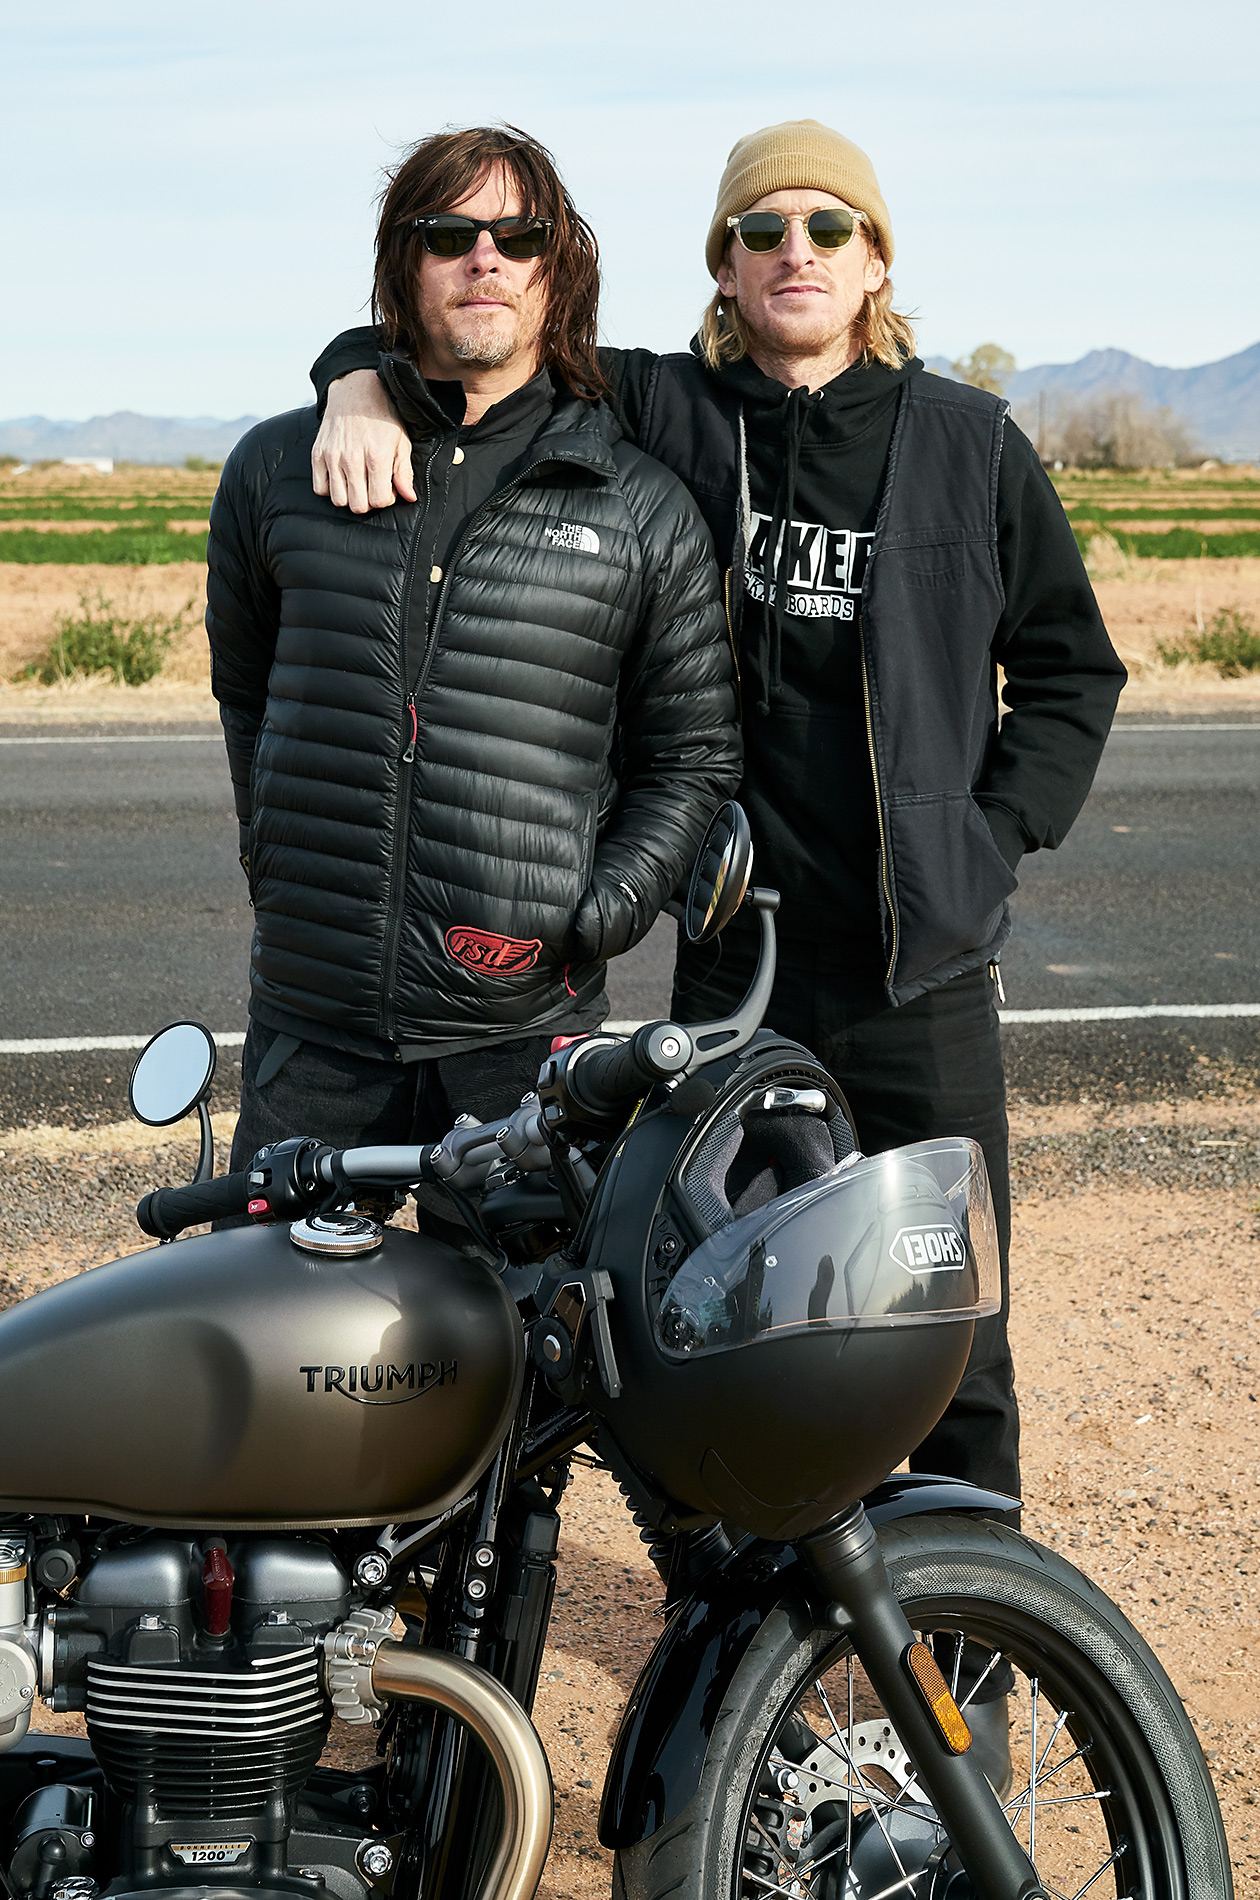 Norman Reedus with Austin Amelio - Steve Craft Photography, Phoenix, Arizona based Commercial, Corporate & Advertising Photographer